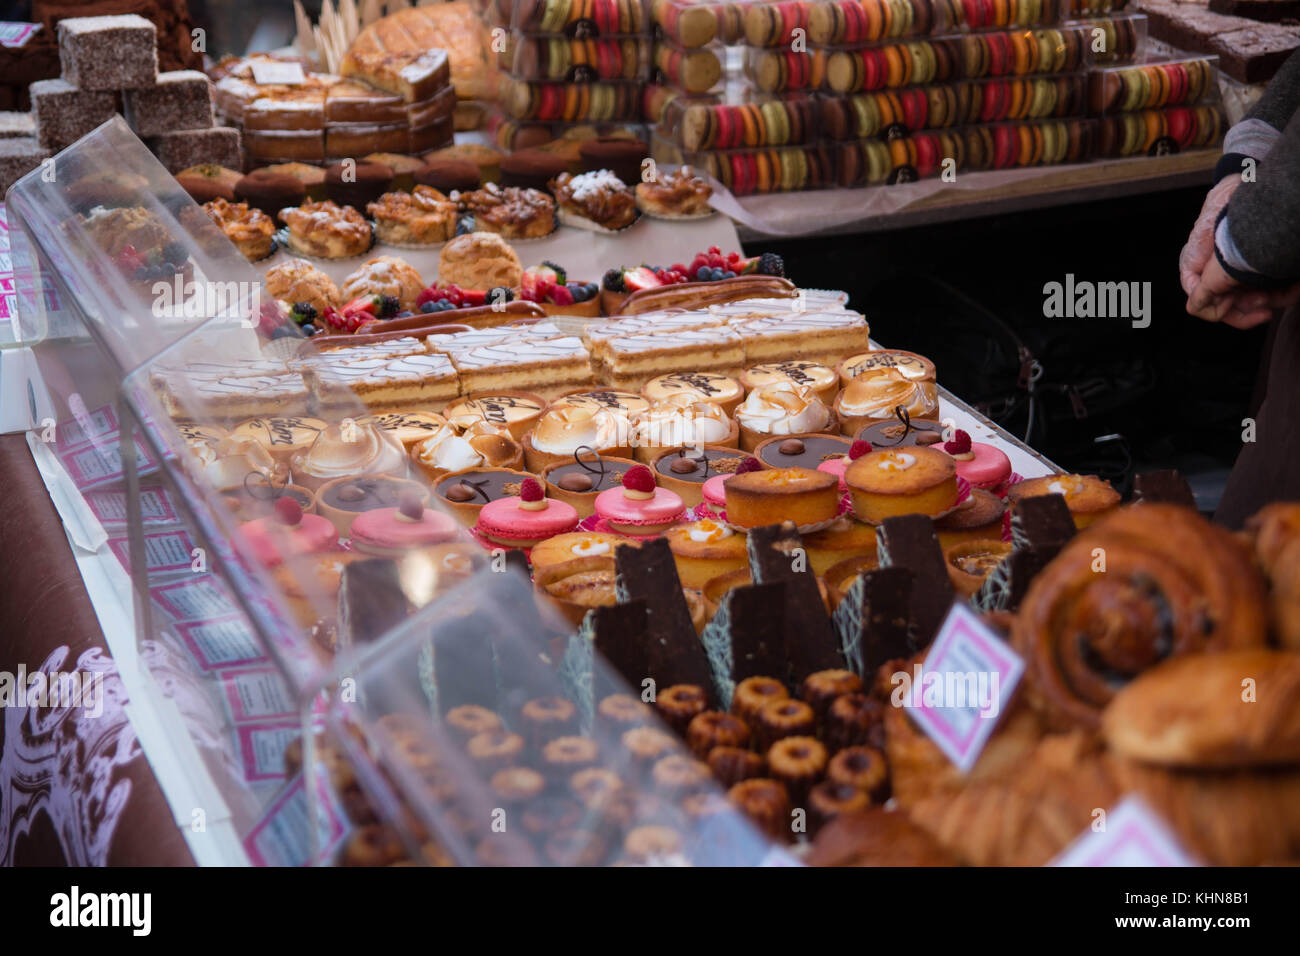 Pastries on sale at Borough Market, London Stock Photo